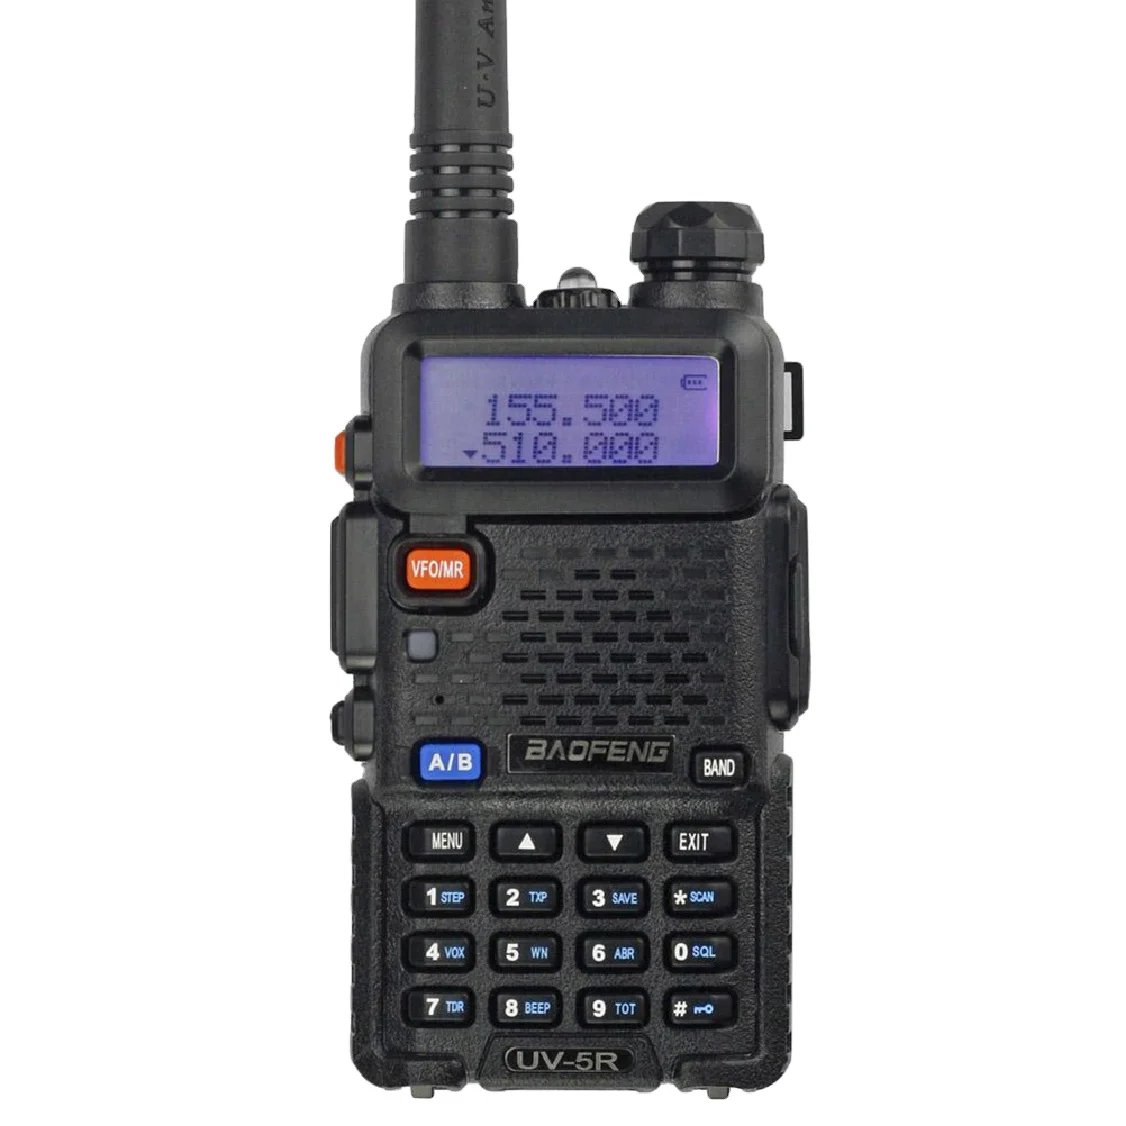 

VHF UHF Walkie Talkie Baofeng UV-5R Long Range Radio Ham 5W Portable Handheld Professional FM Transmitter